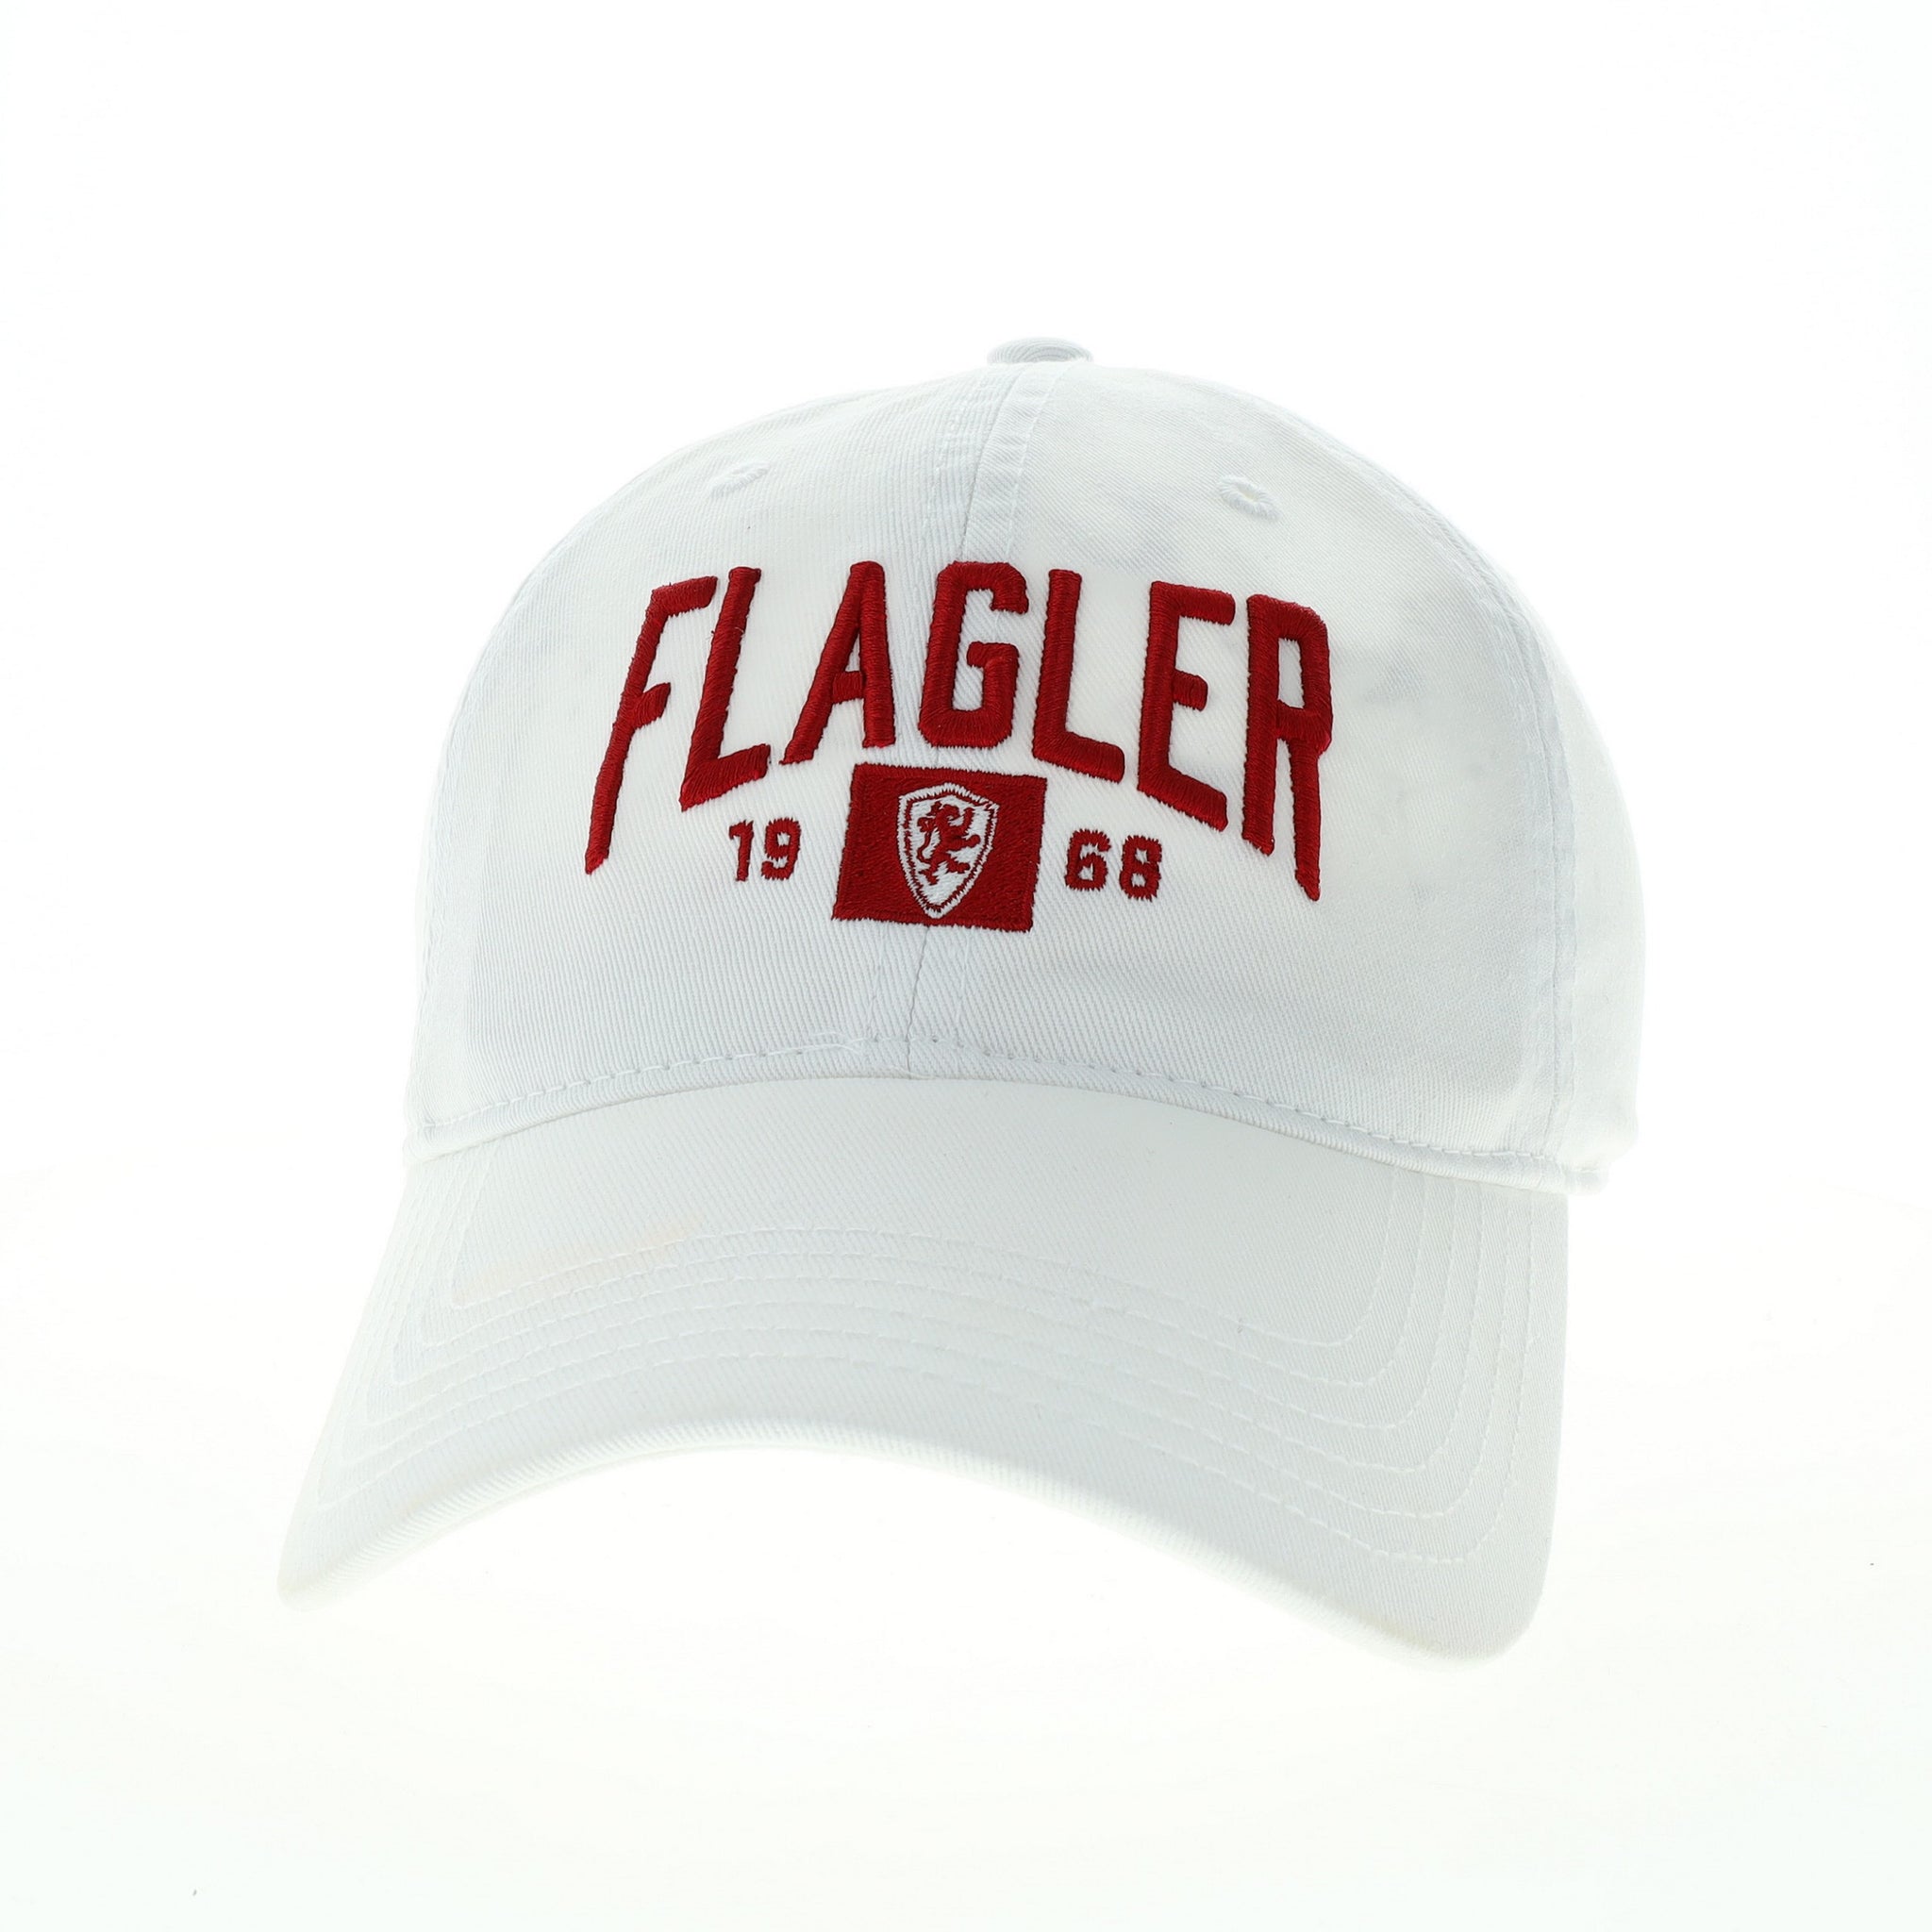 Flagler 1968 Relax Twill Hat